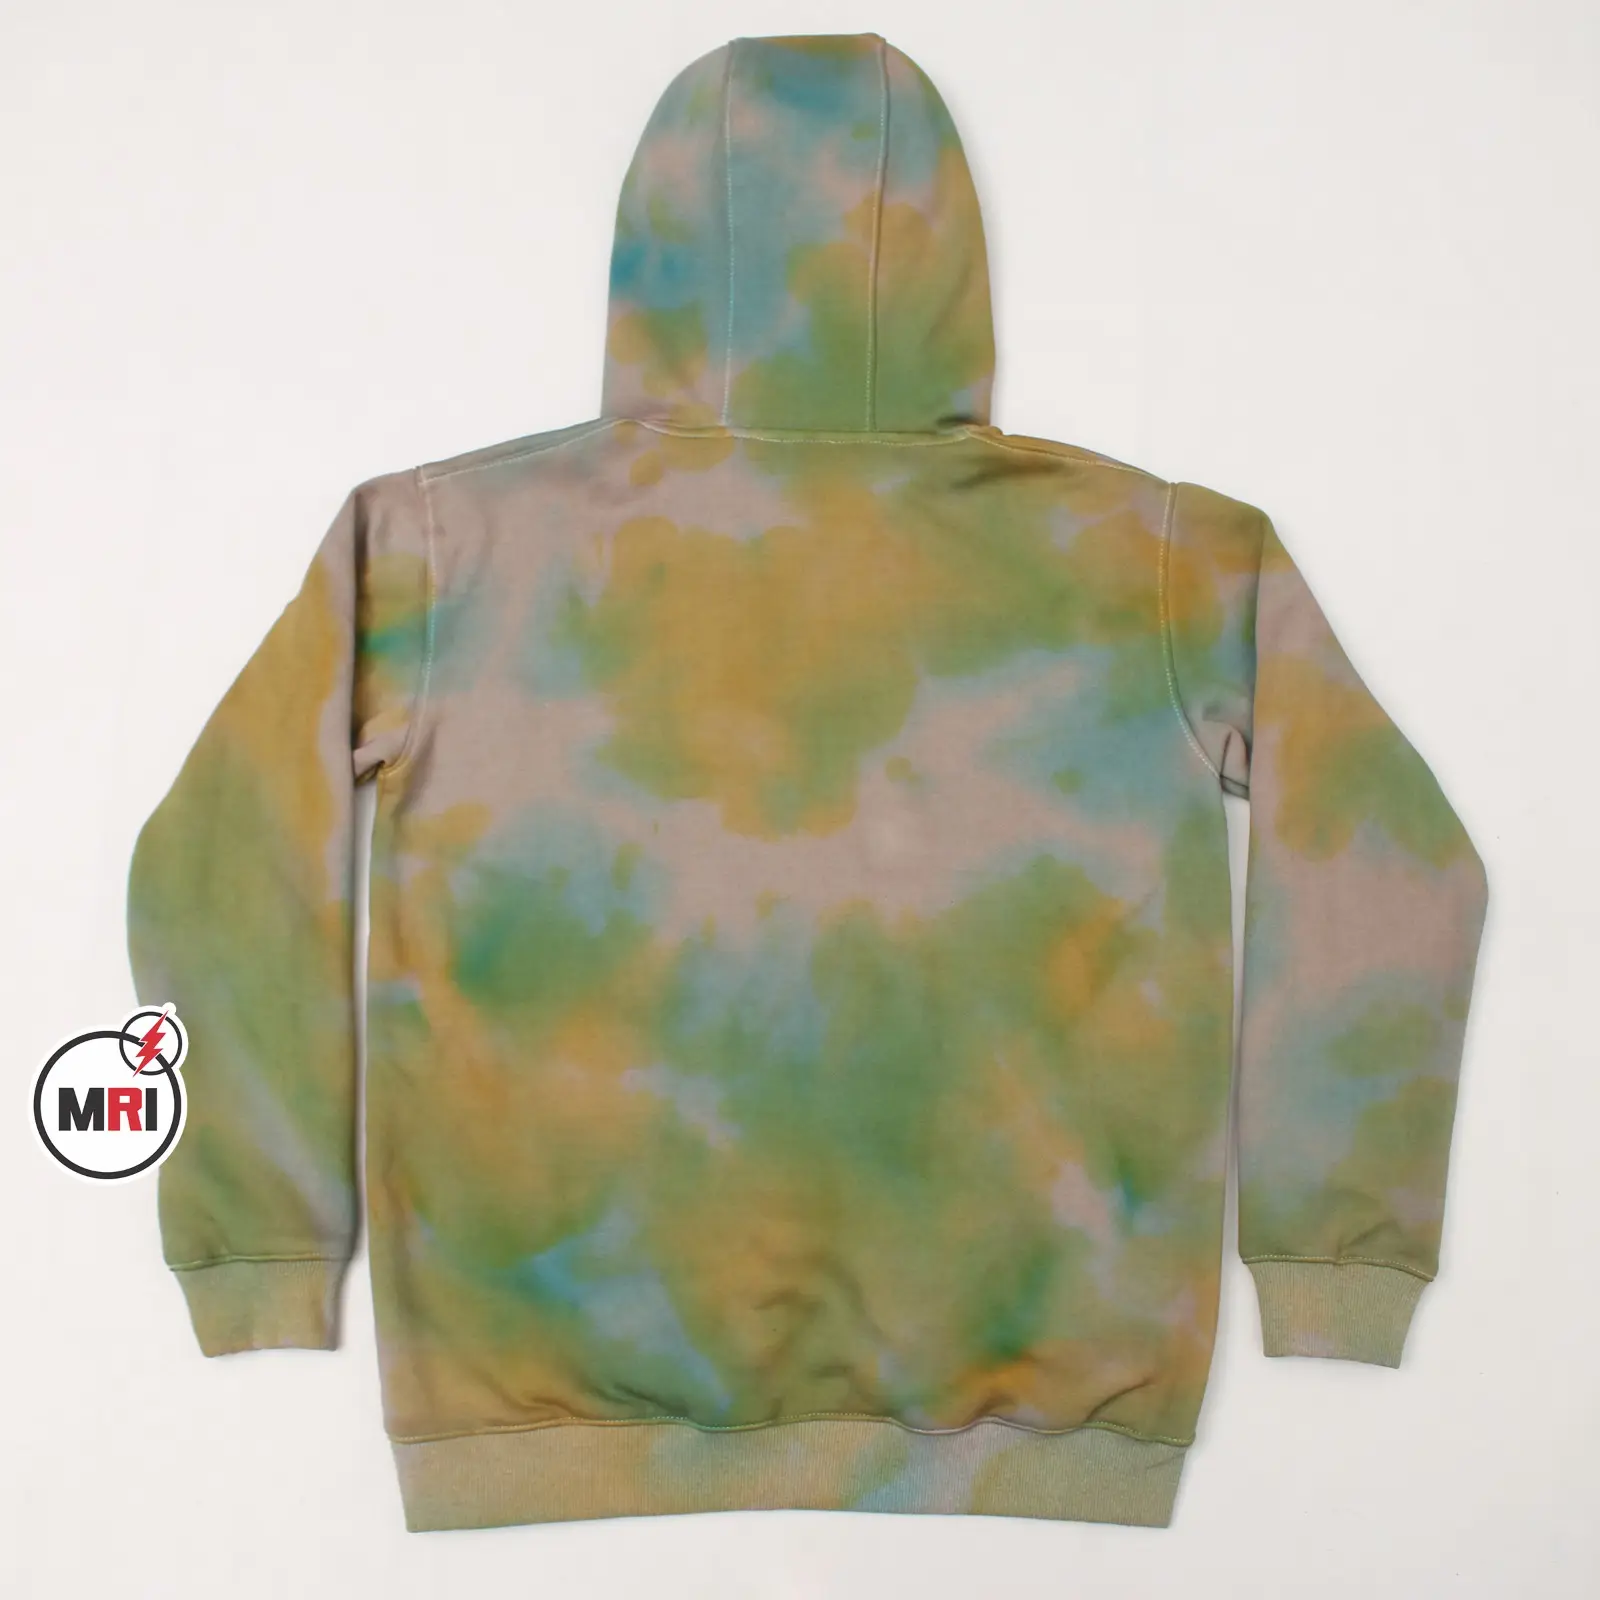 wholesales custom hoodie woman embroidery patches hip hop apparel streetwear womens tie dye hoodies for women